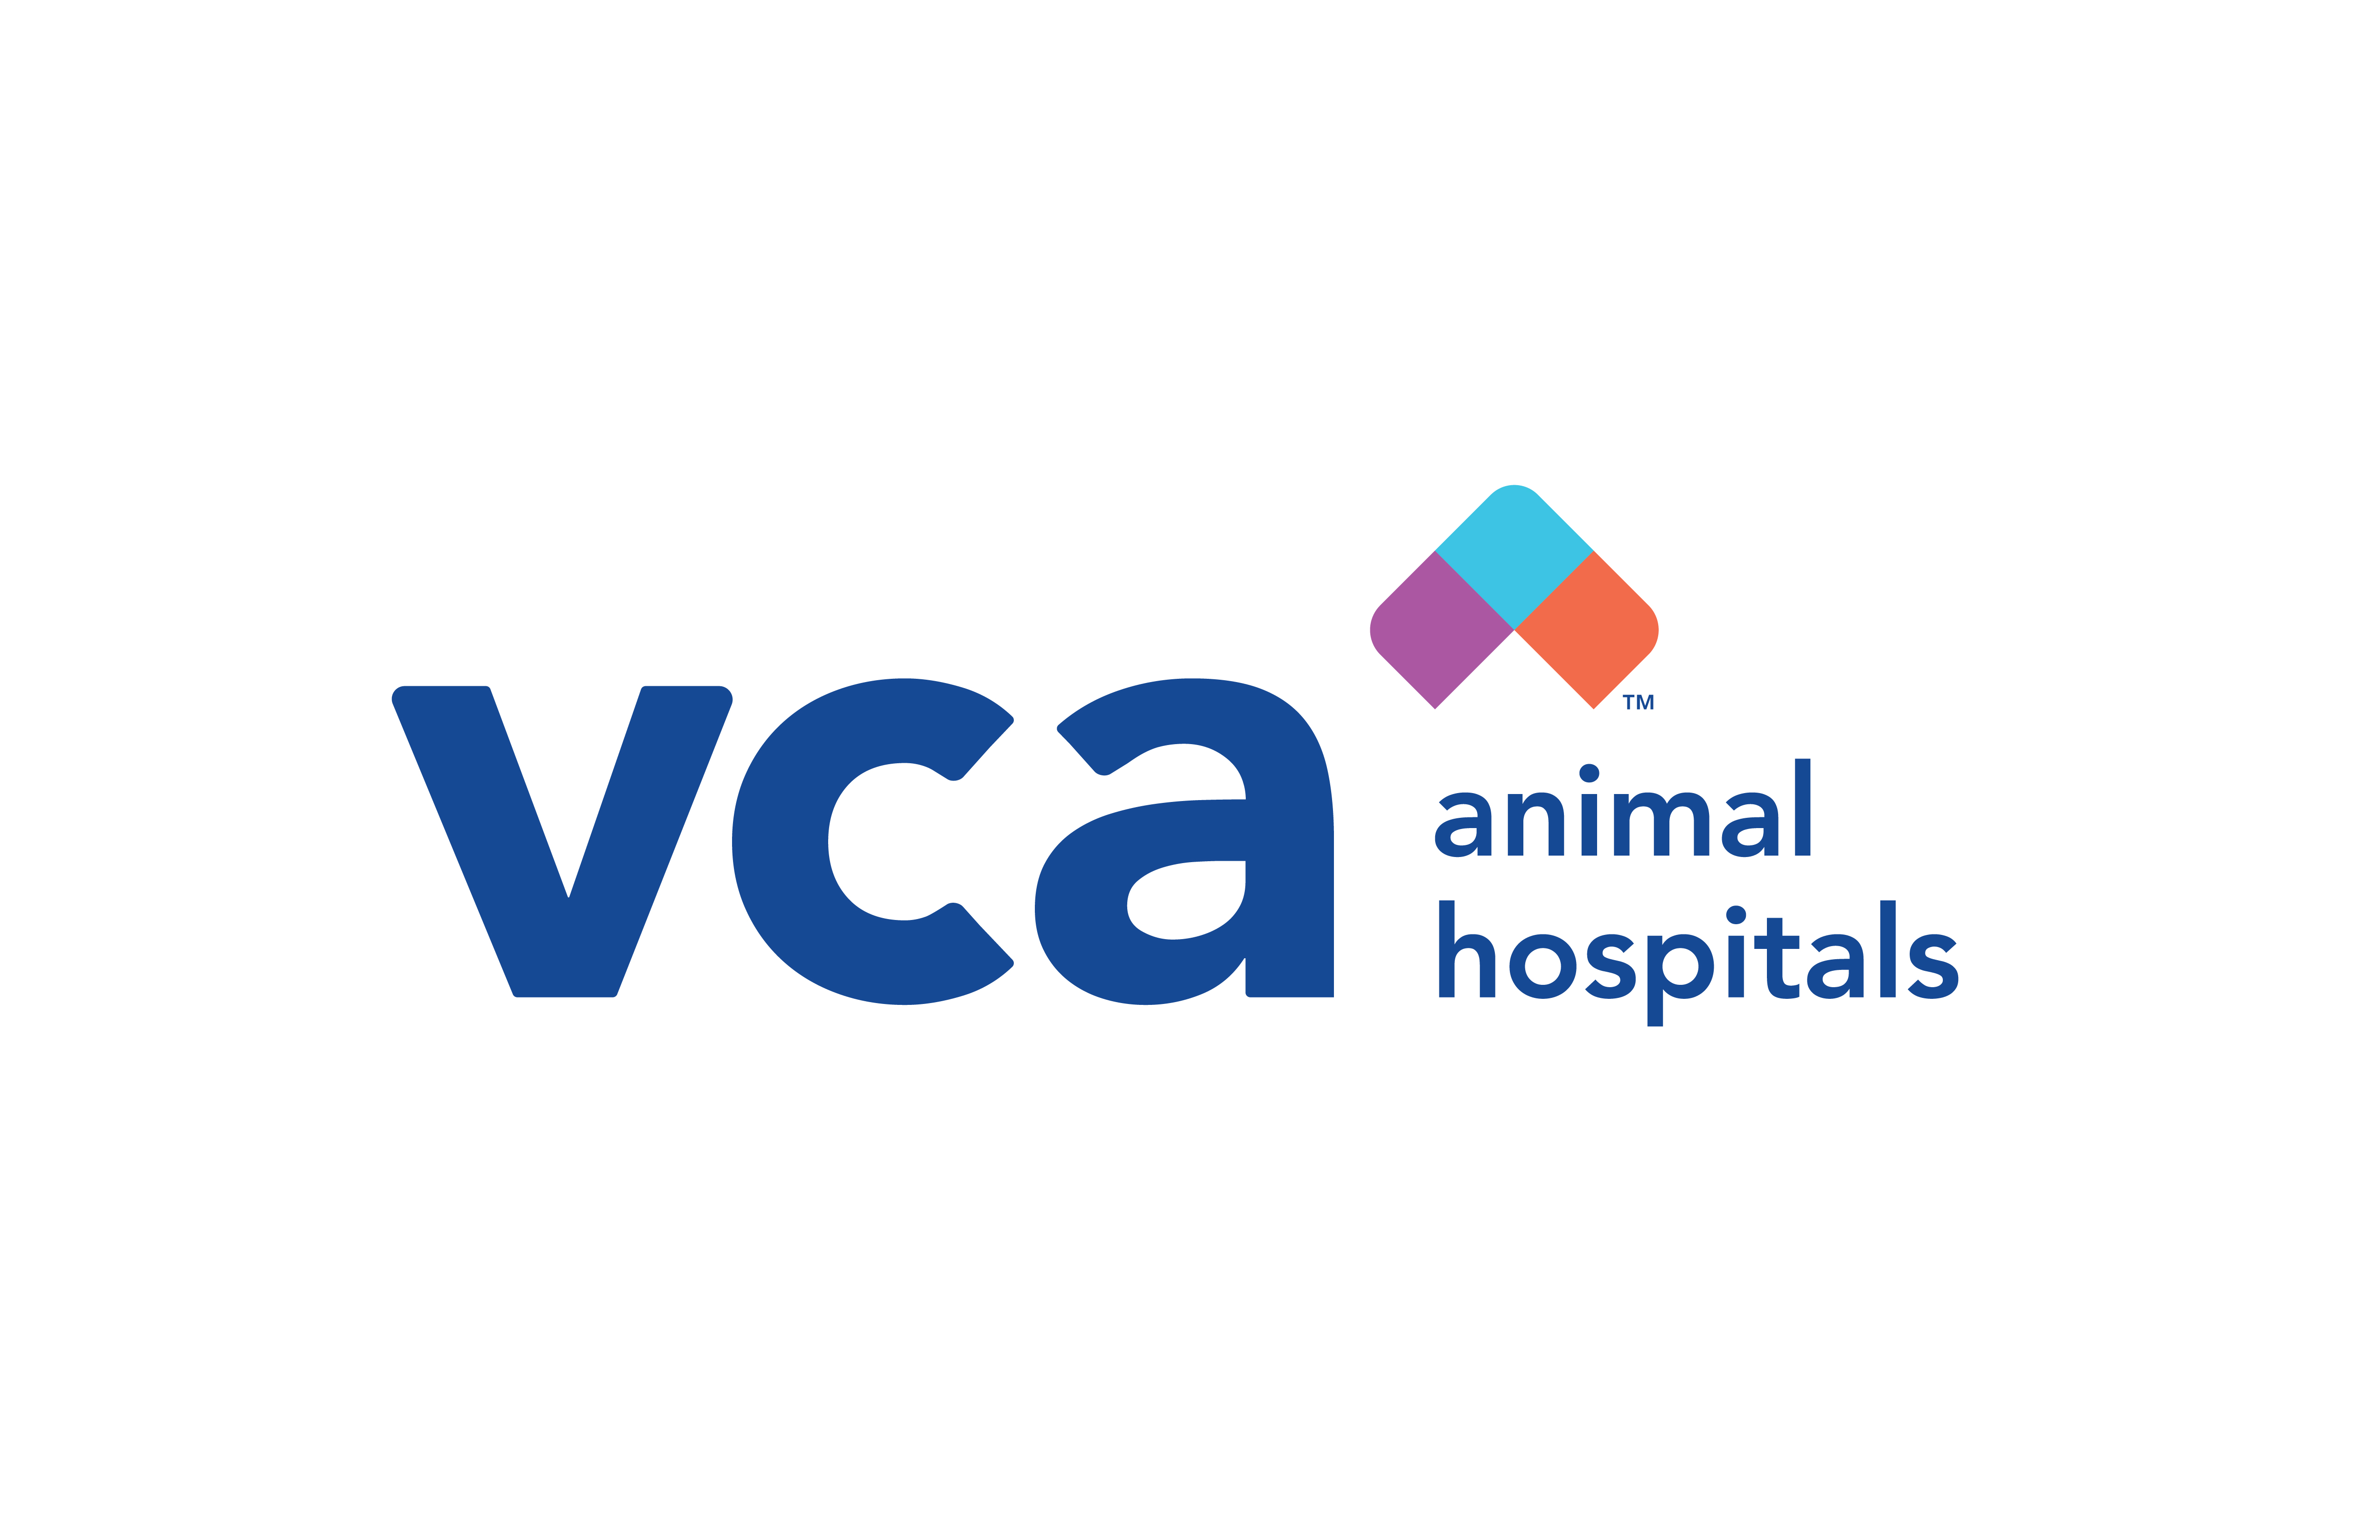 Vicar Operating, Inc. dba VCA logo